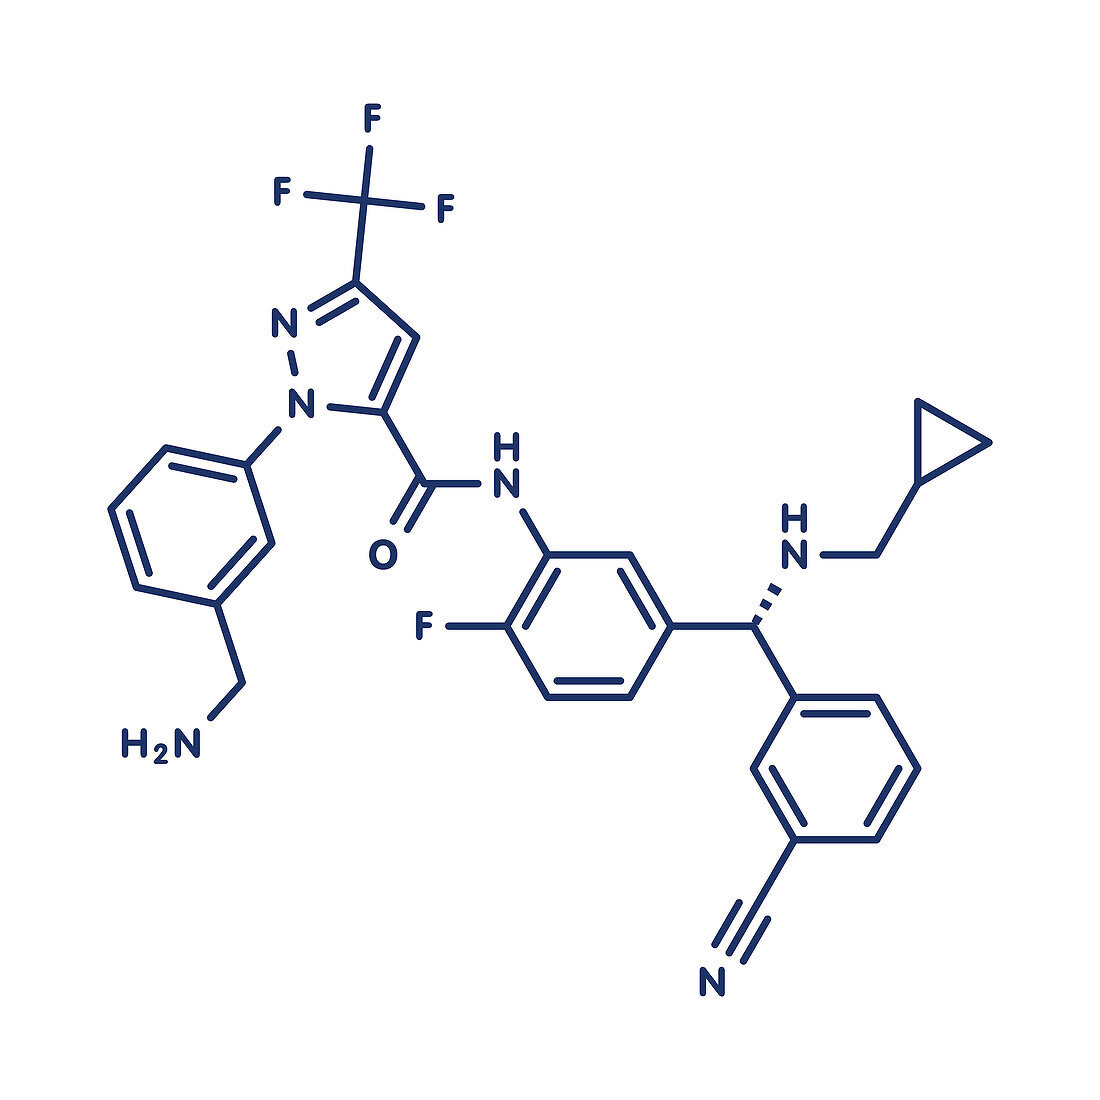 Berotralstat angioedema drug molecule, illustration